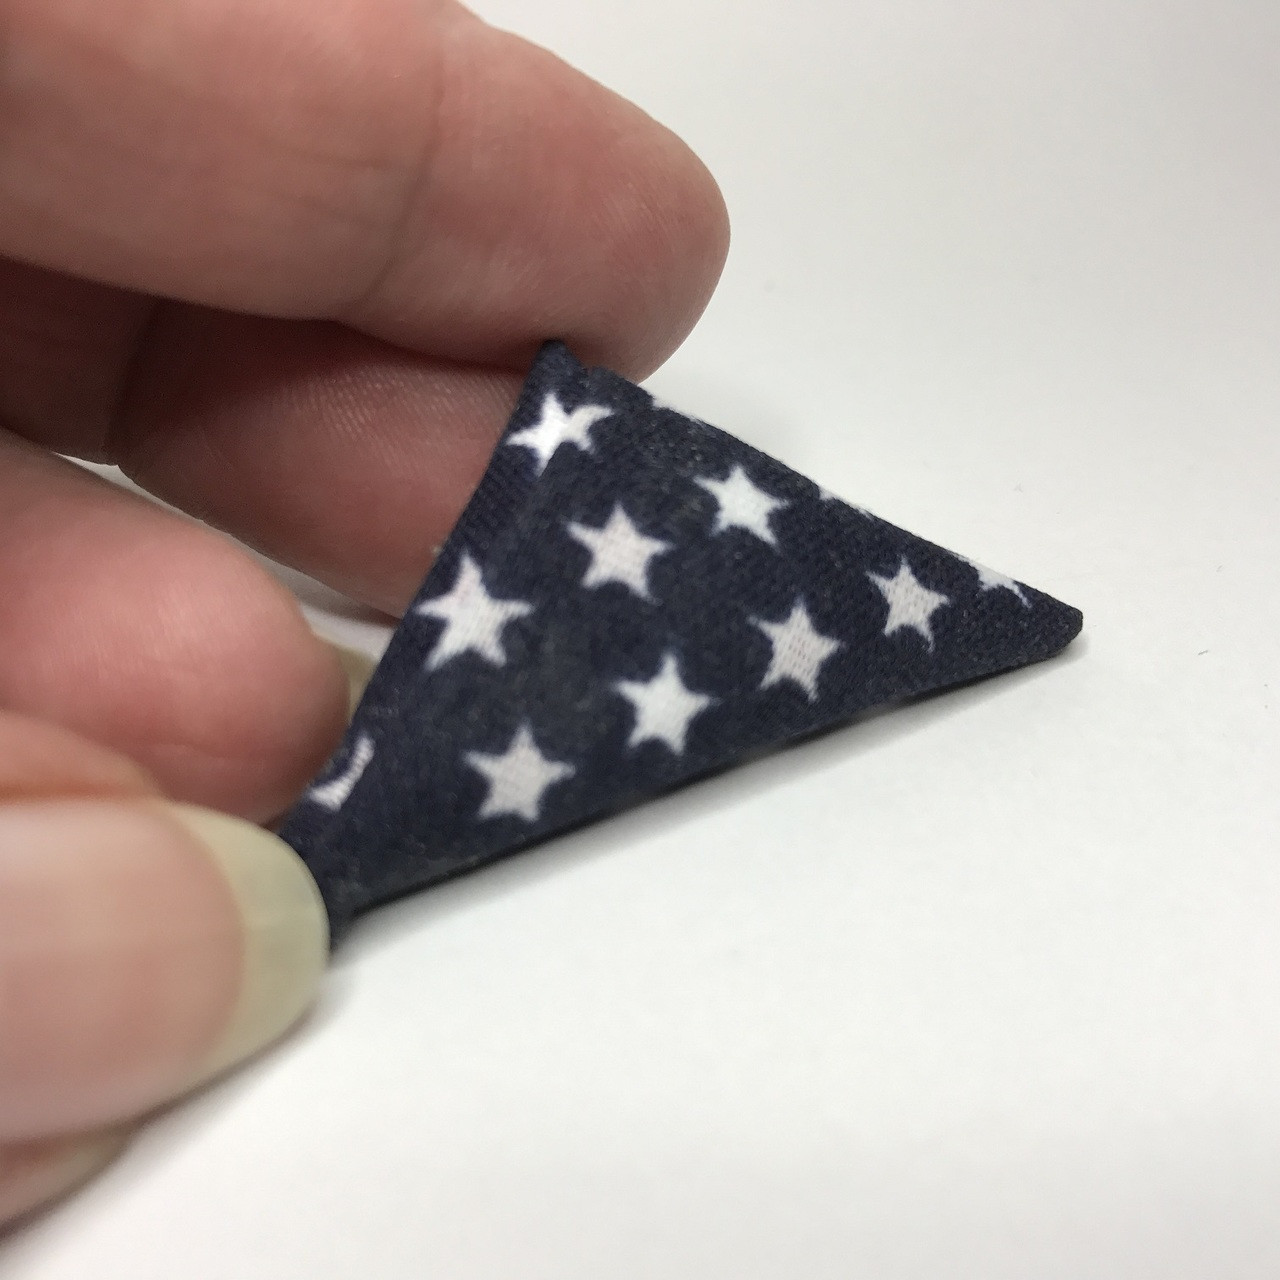 Miniature folded American flag